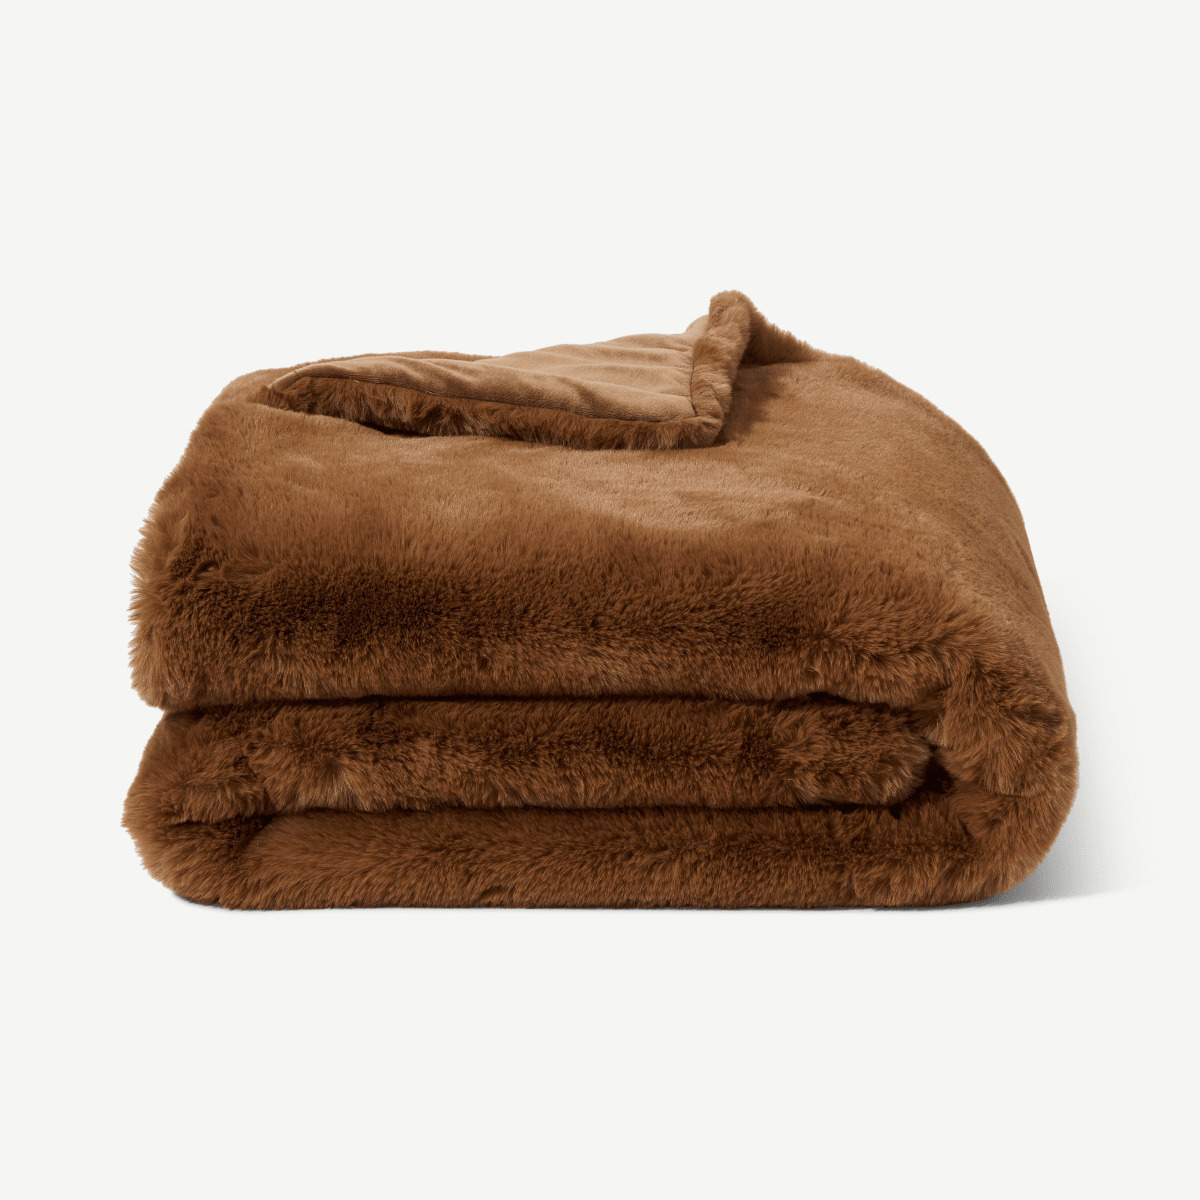 Azala Luxury Faux Fur Throw, 130 x 170 cm, Cinnamon